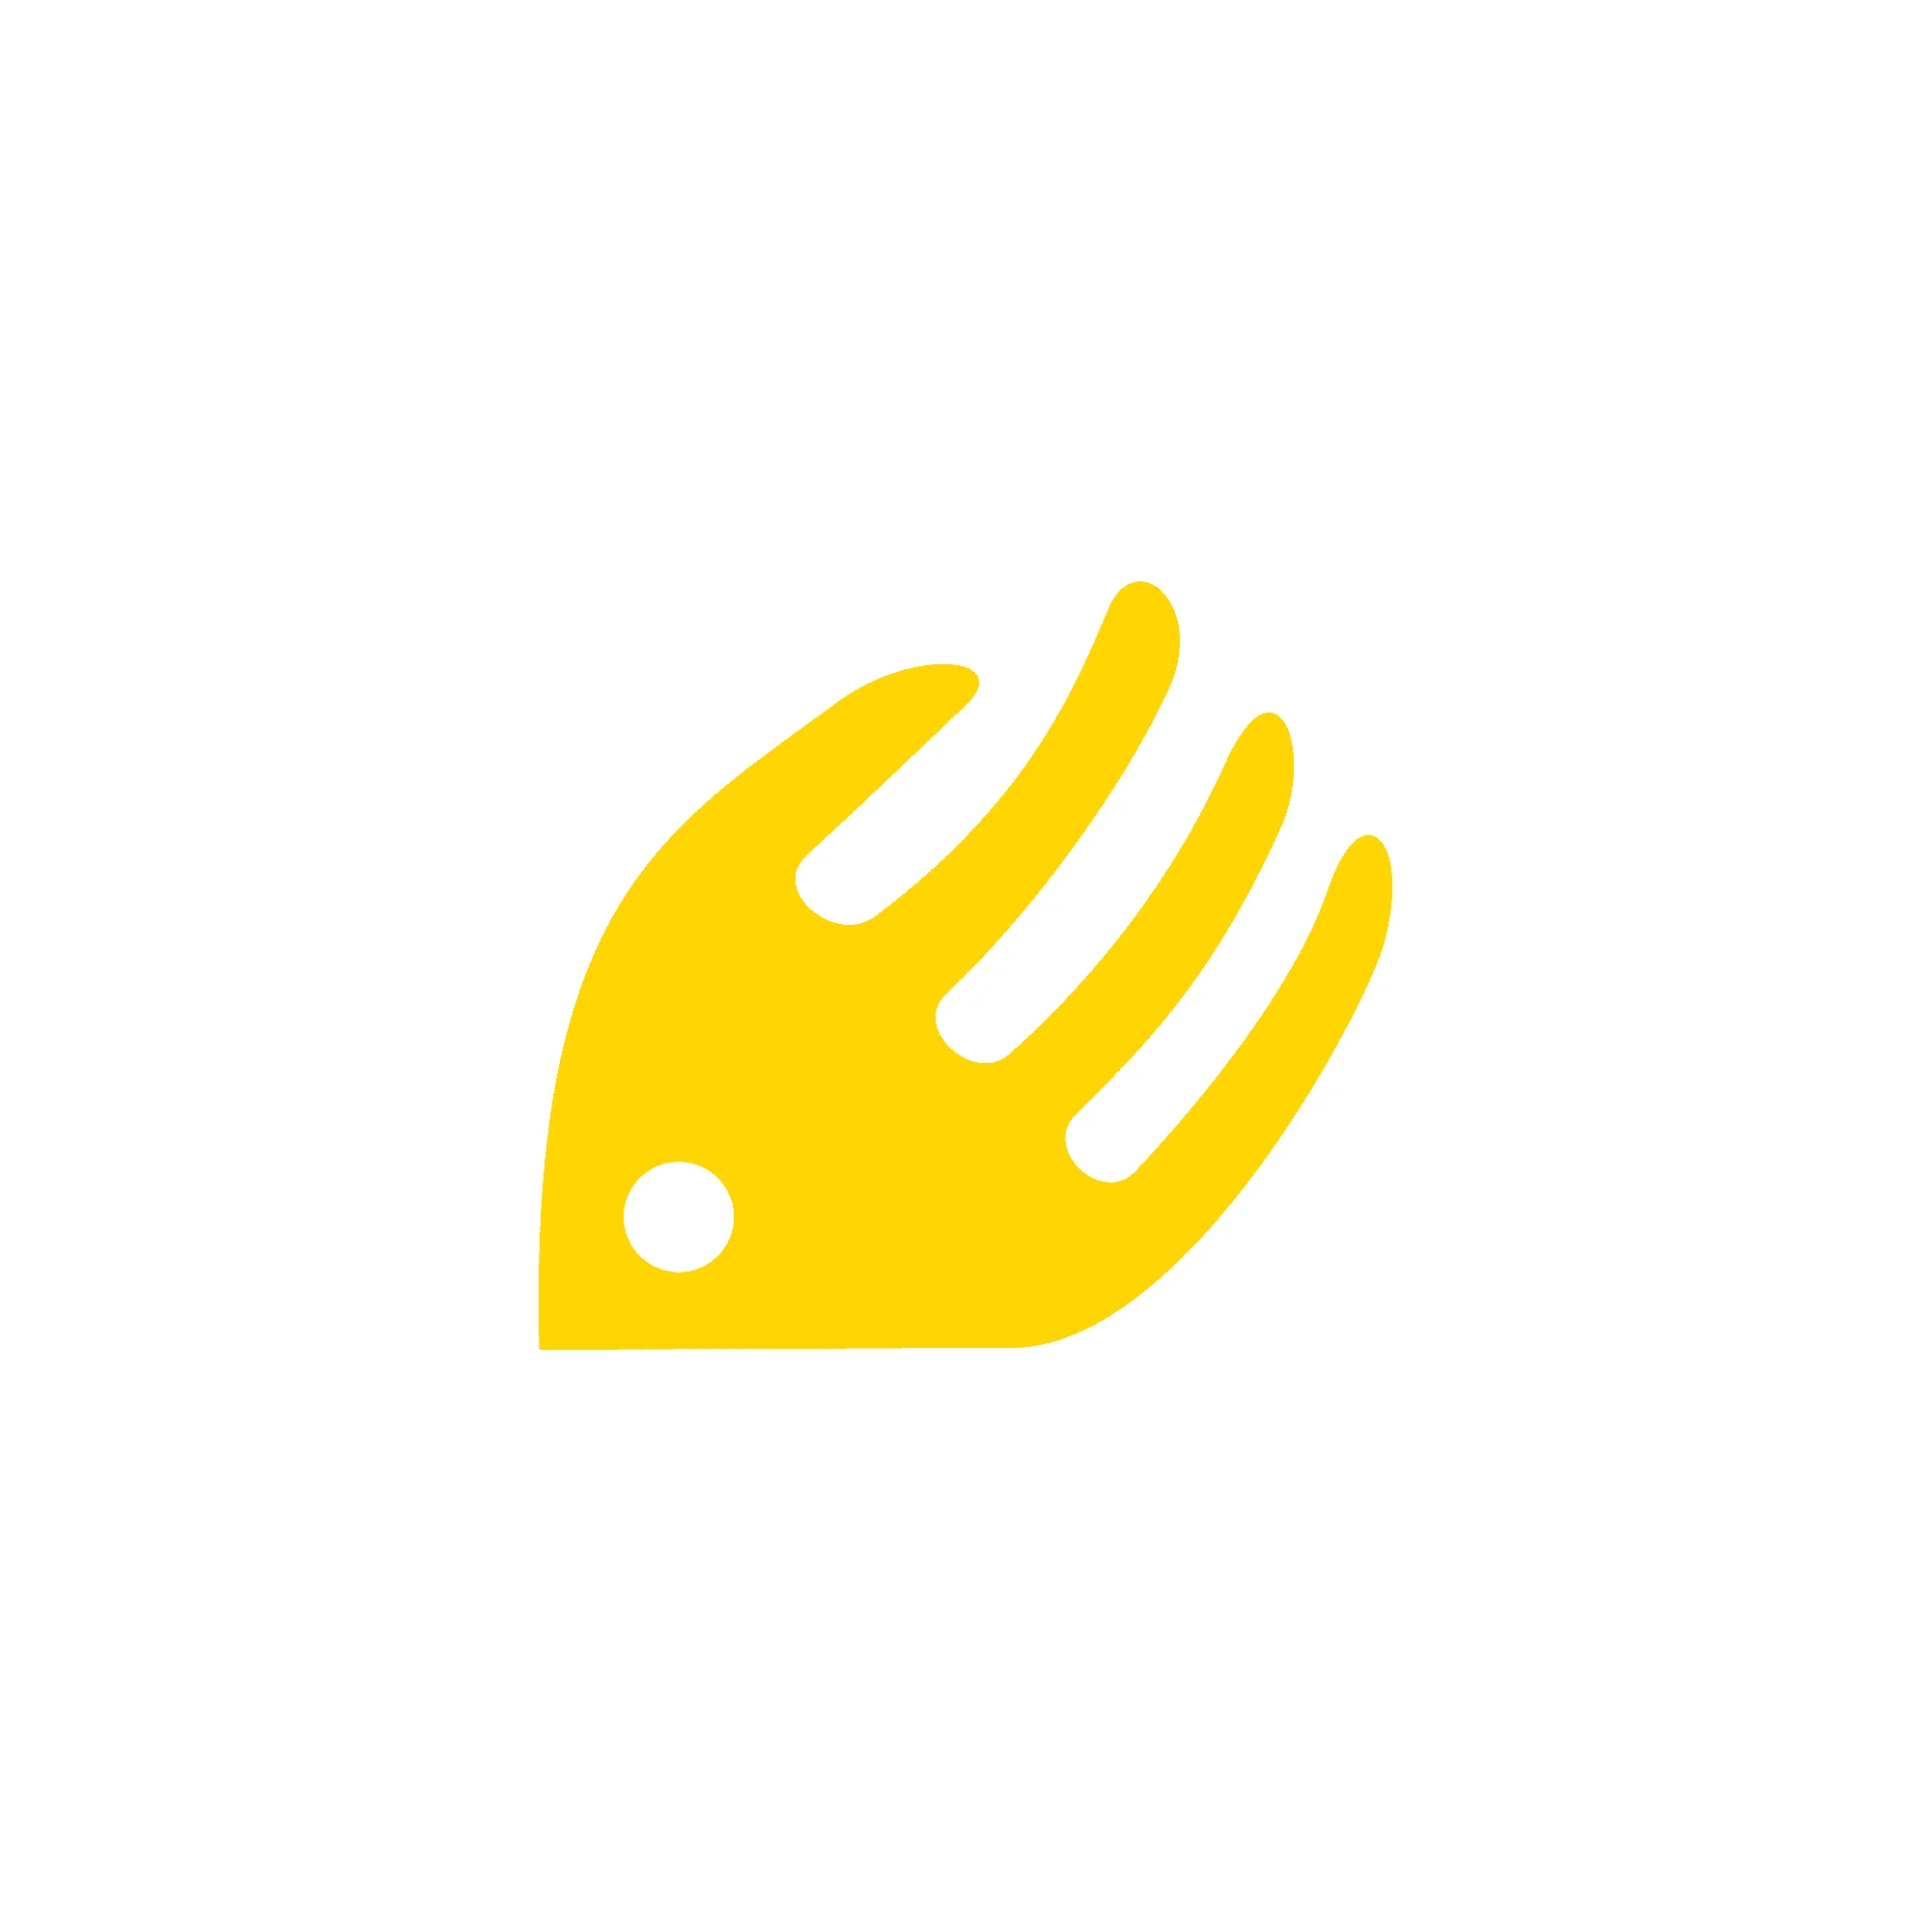 Branding Logo Design Fish fork shaped, yellow in white background